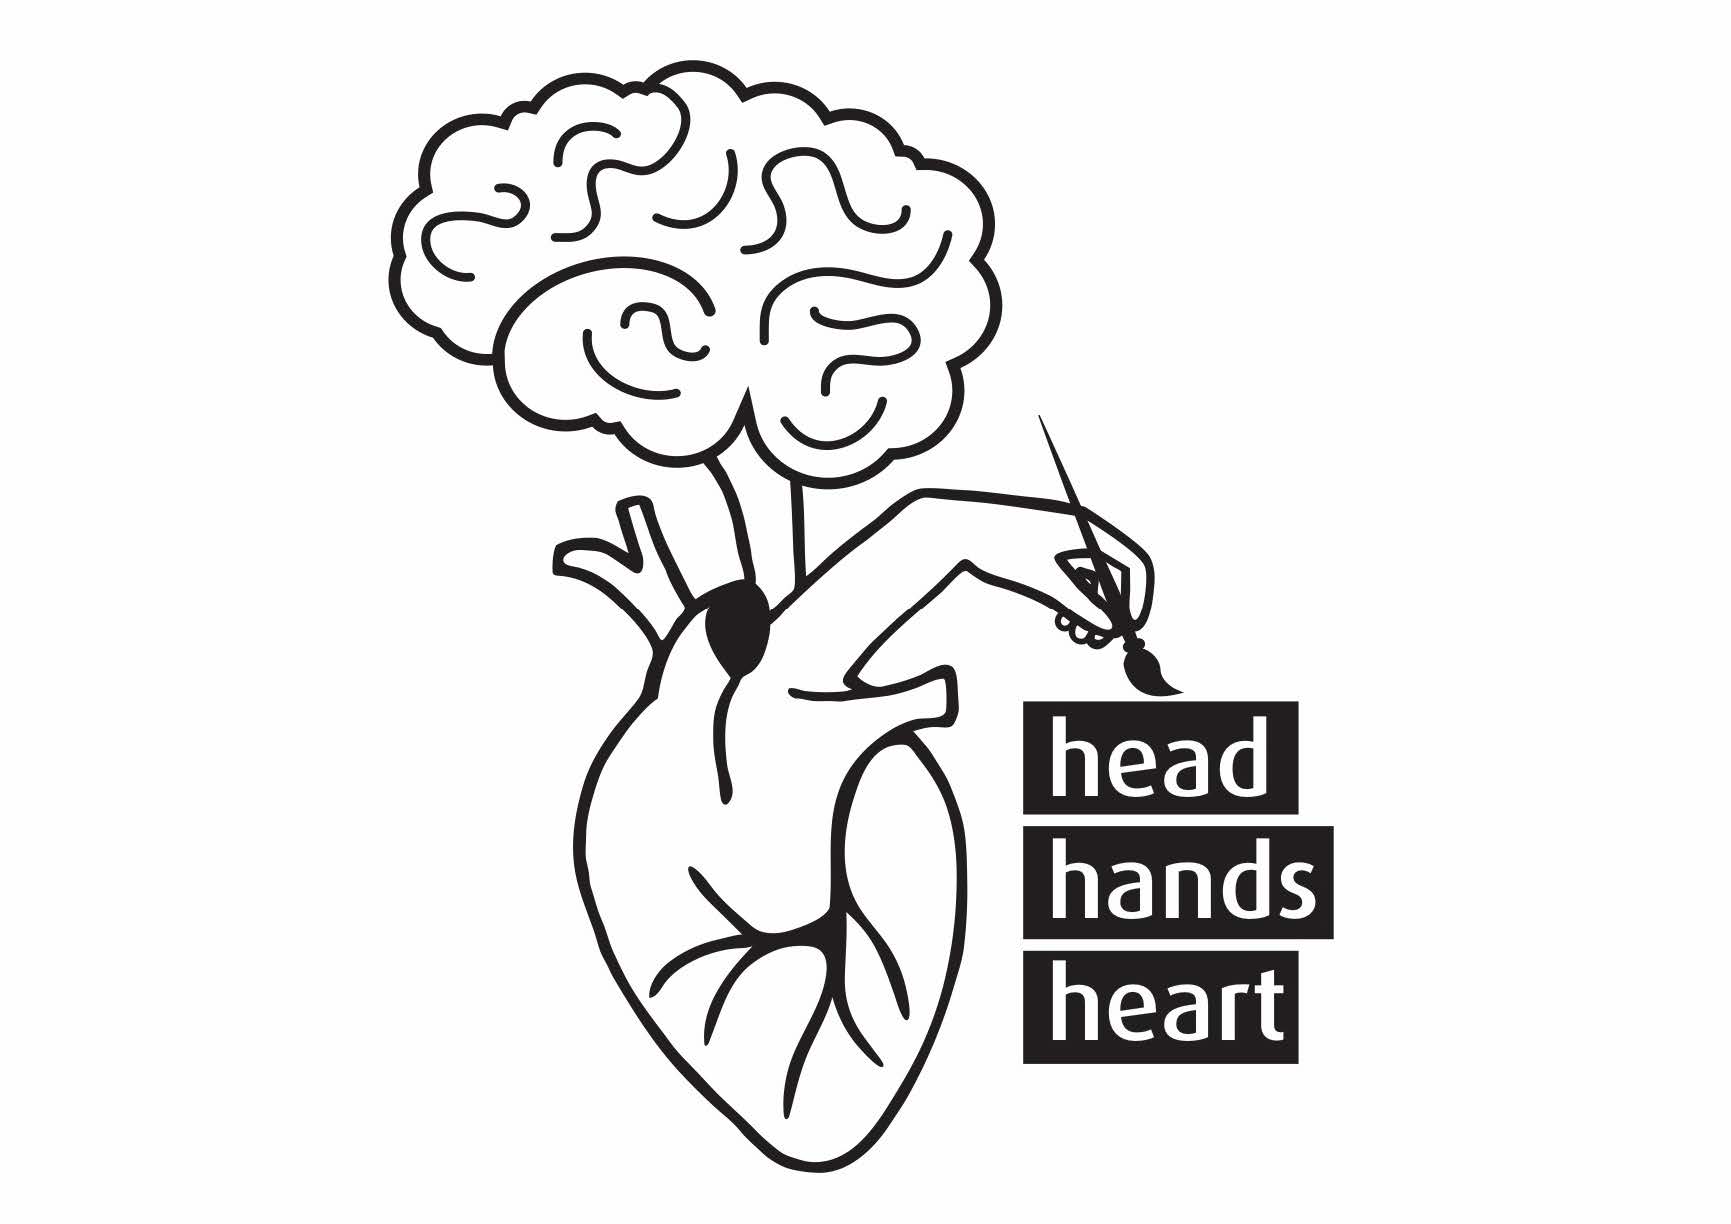 Head, hands & heart © HKB 2017